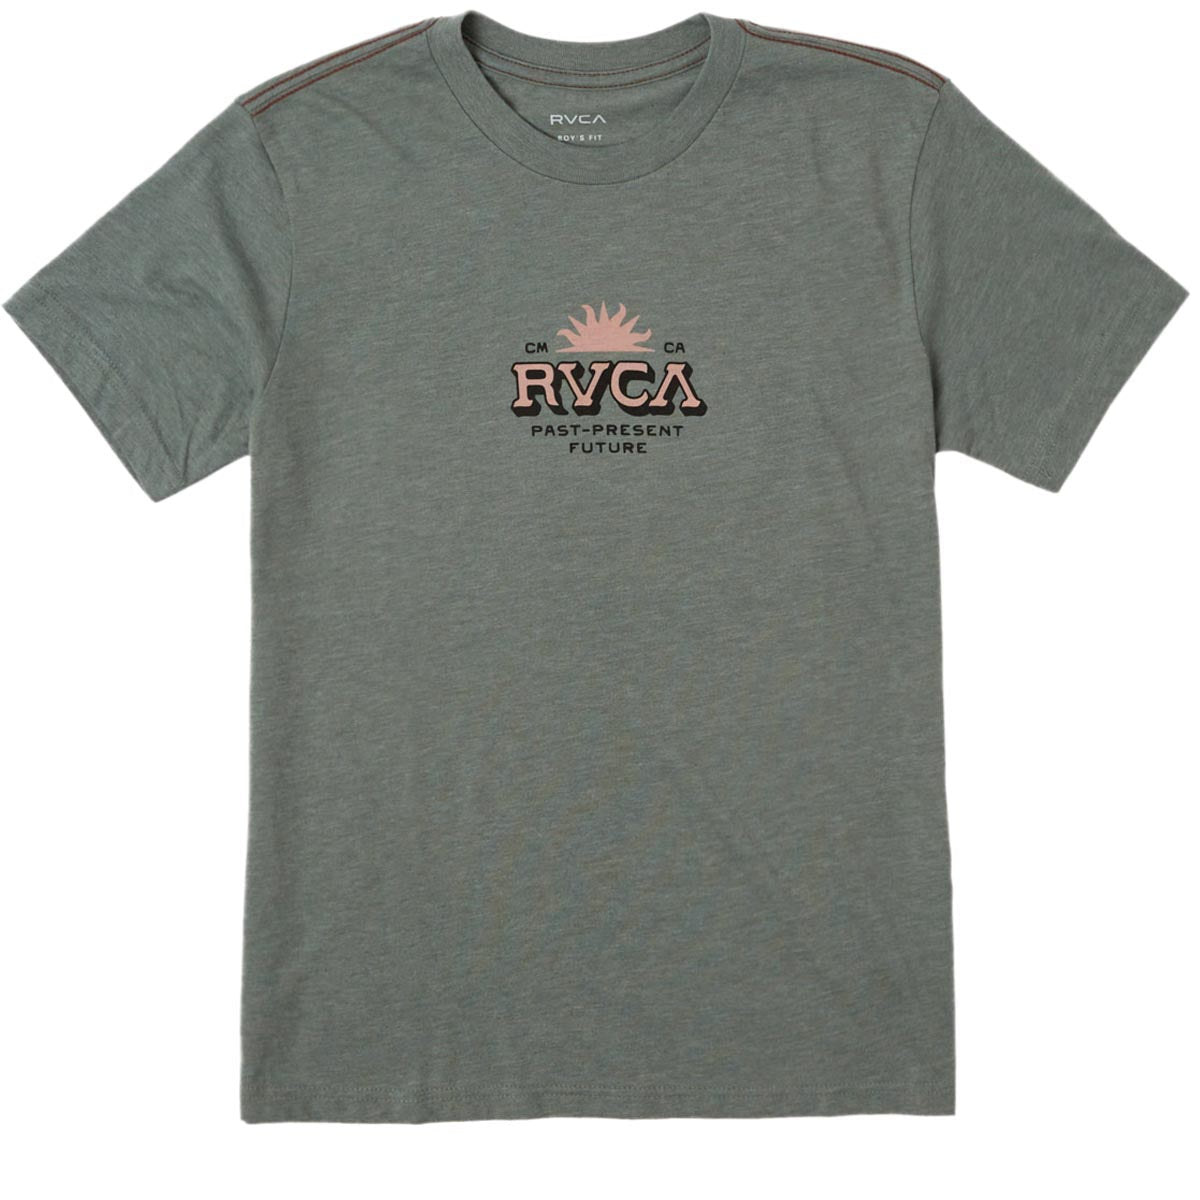 RVCA Type Set T-Shirt - Jade image 1